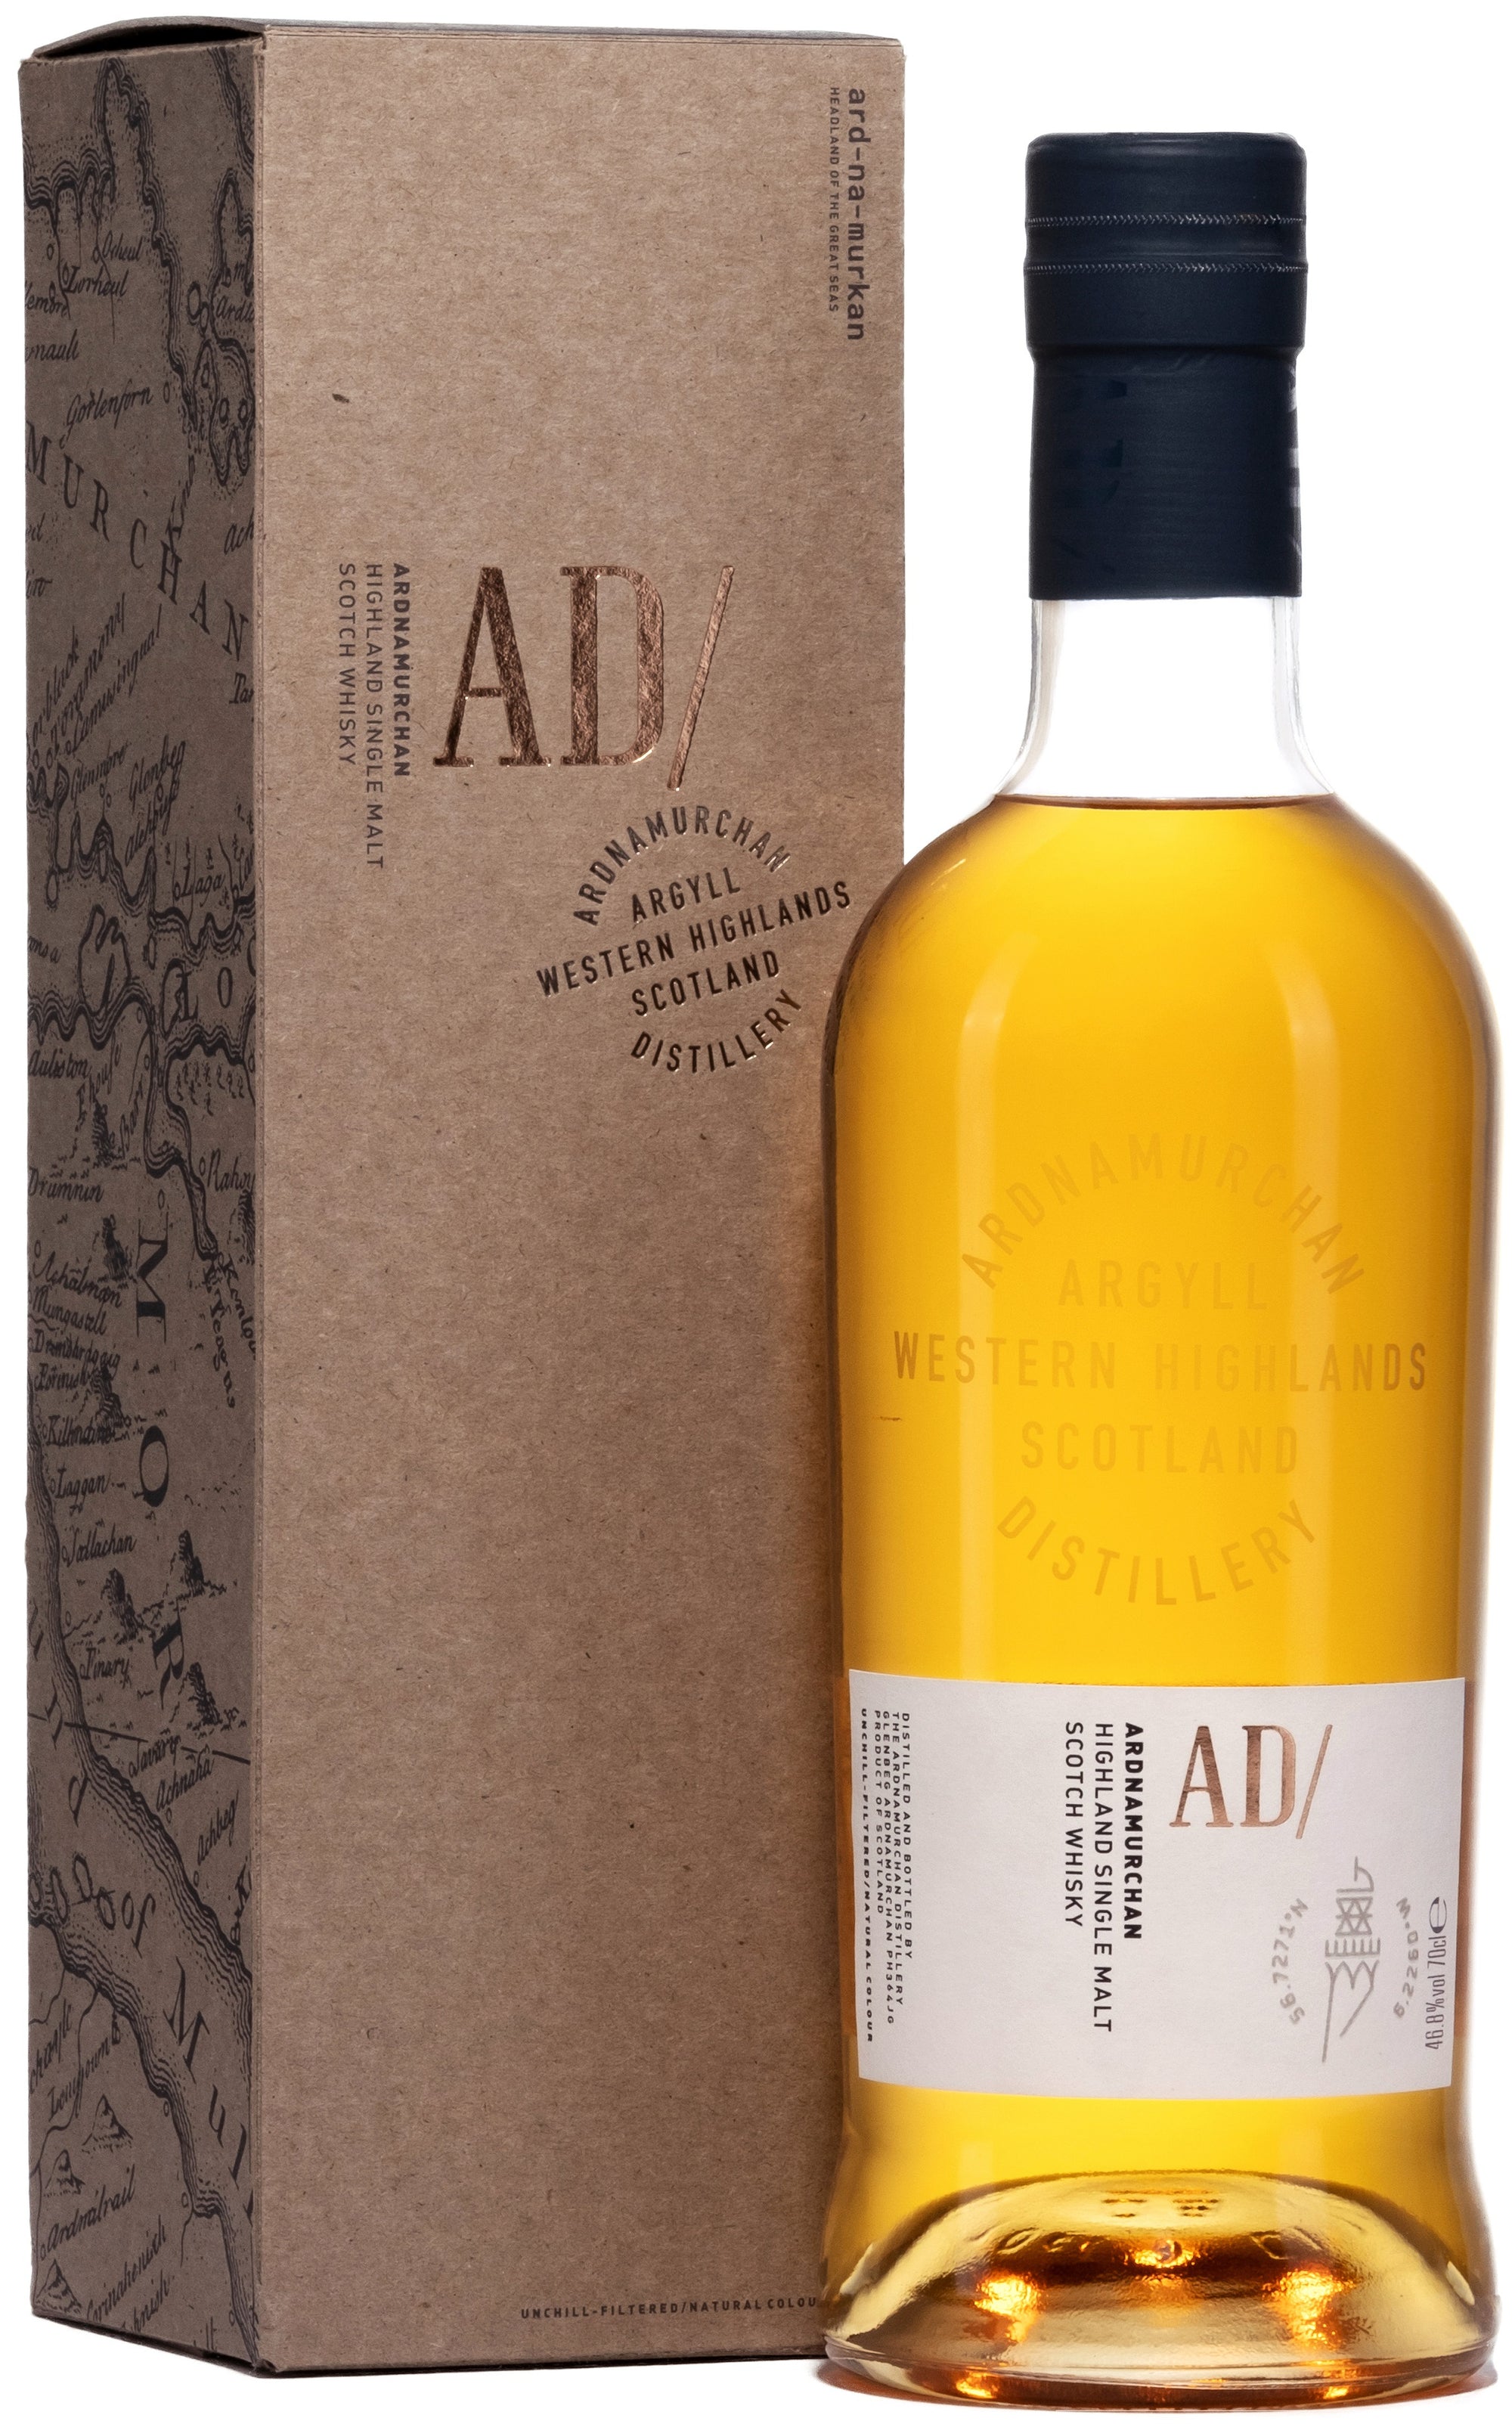 Bottle of Ardnamurchan AD/ Single Malt Scotch Whisky, 46.8% - The Spirits Room